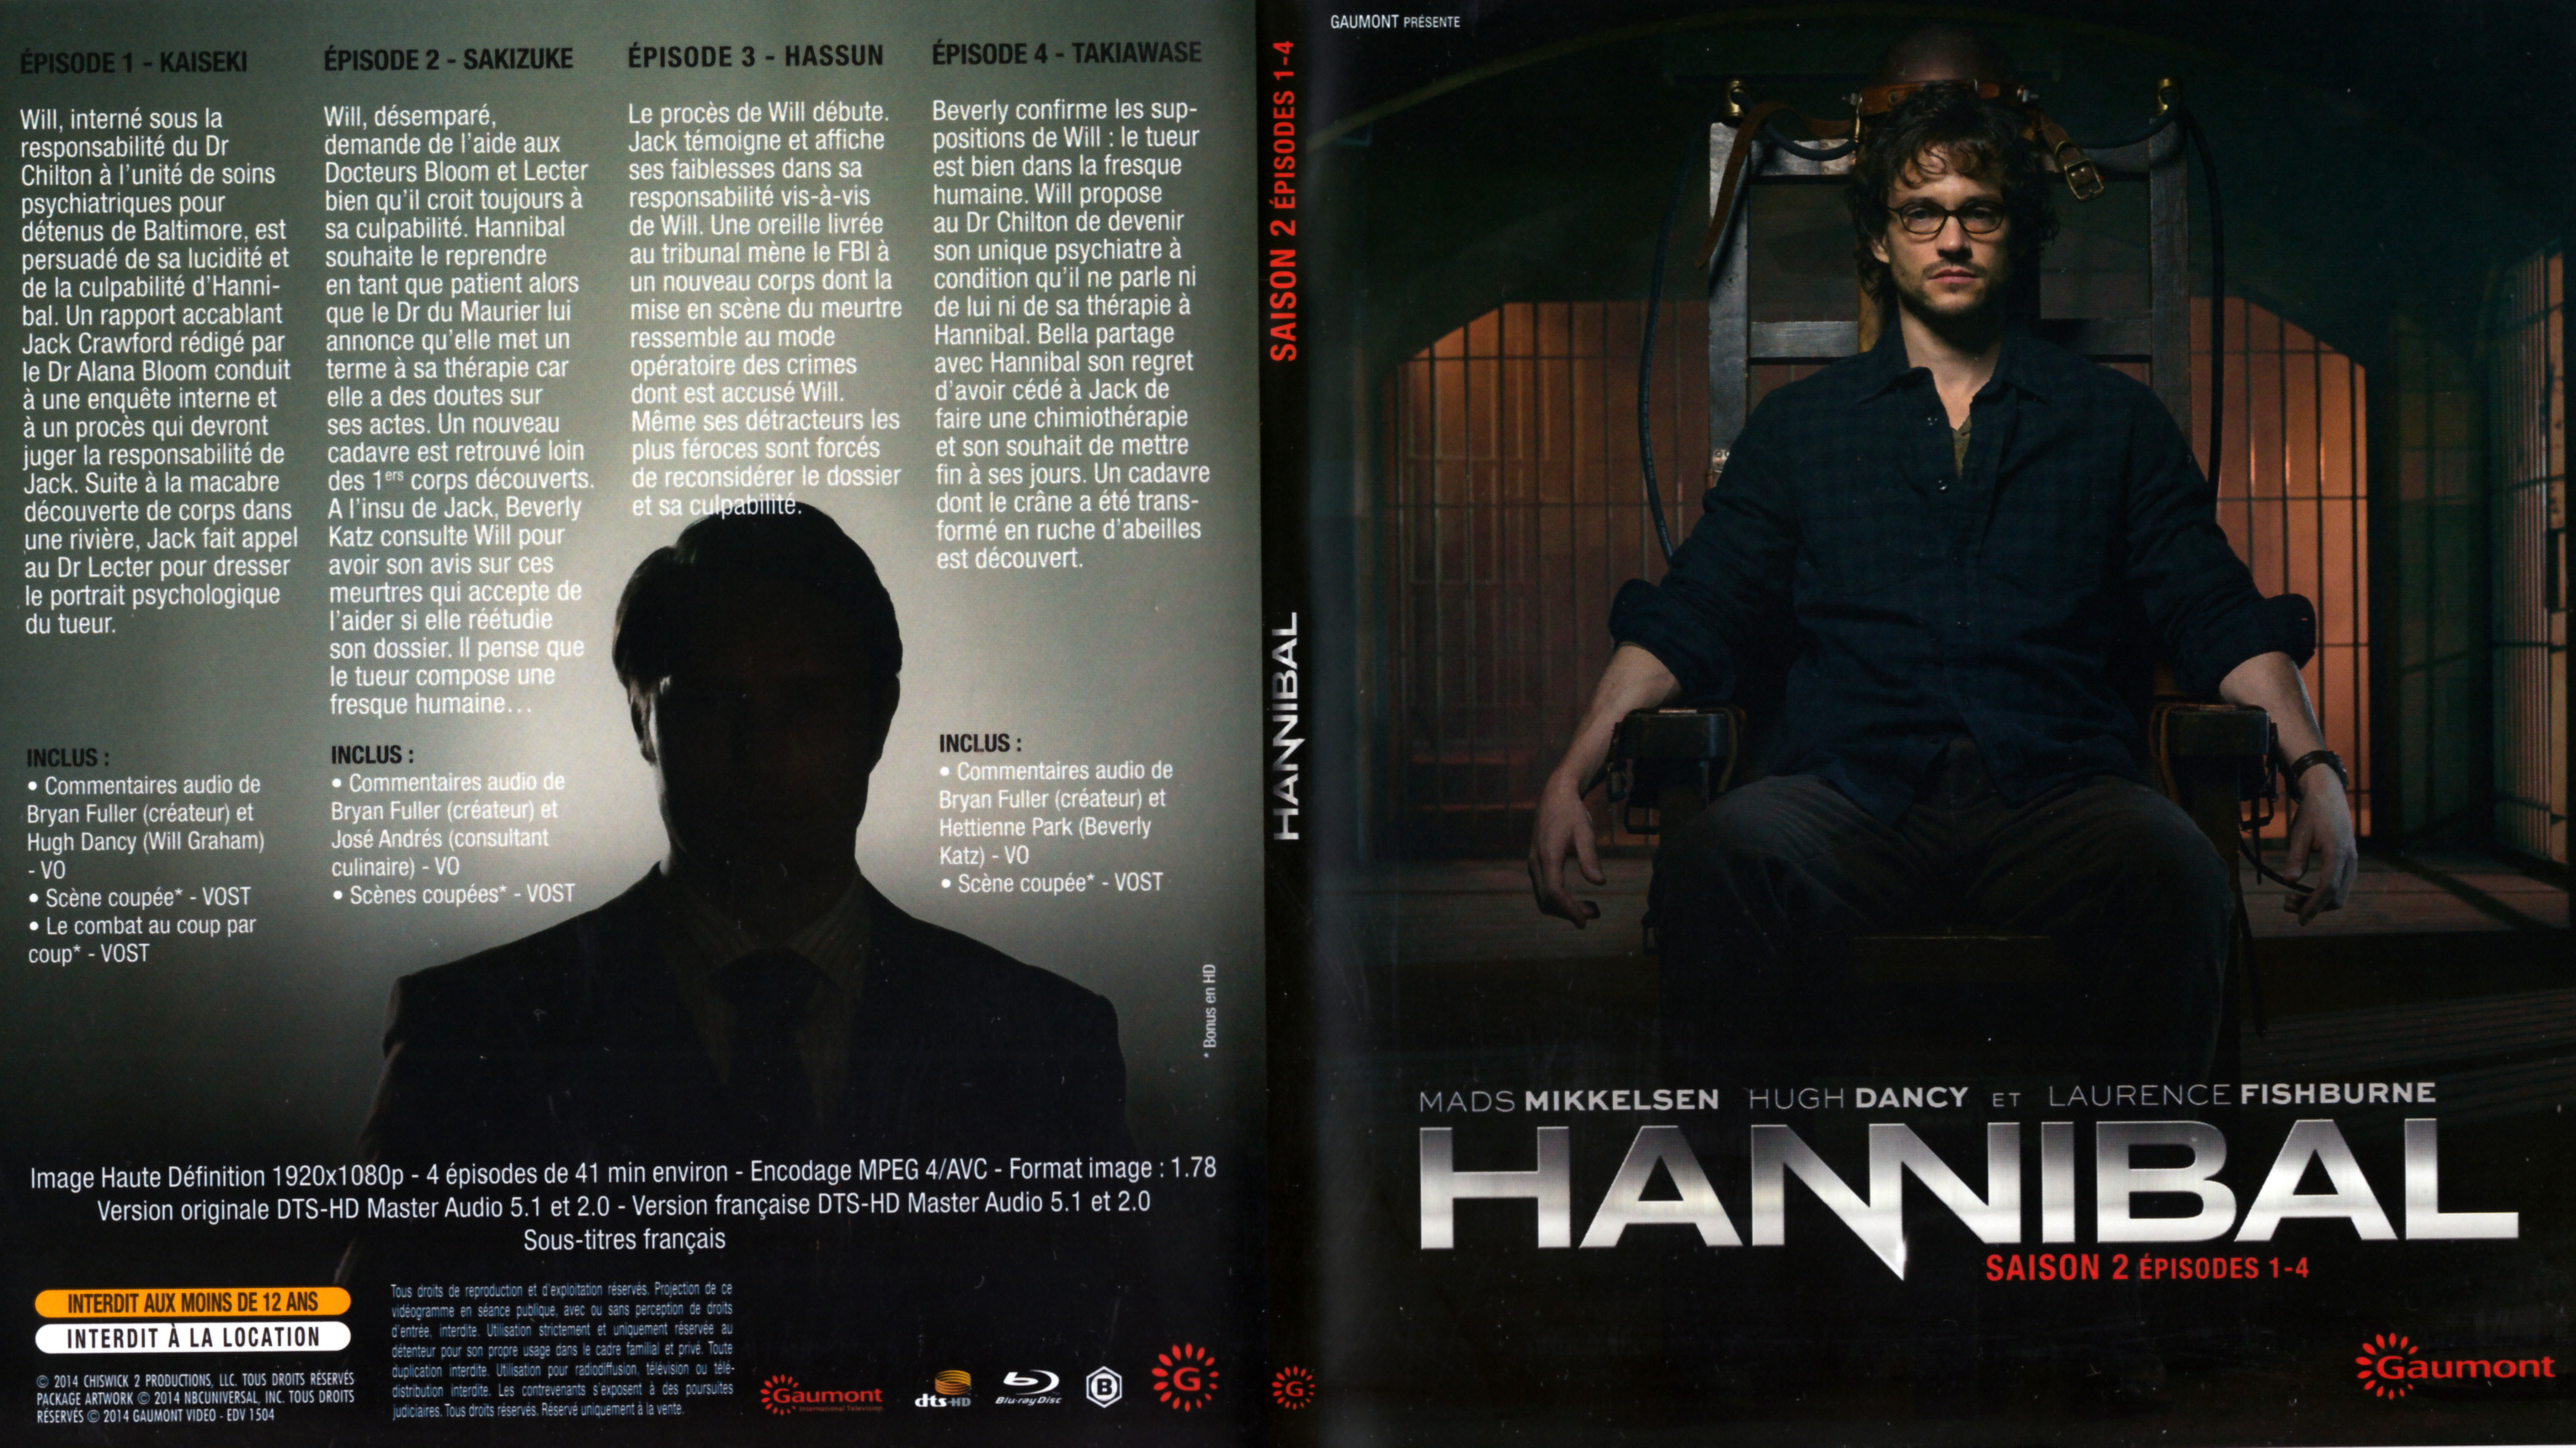 Jaquette DVD Hannibal Saison 2 DISC 1 (BLU-RAY)